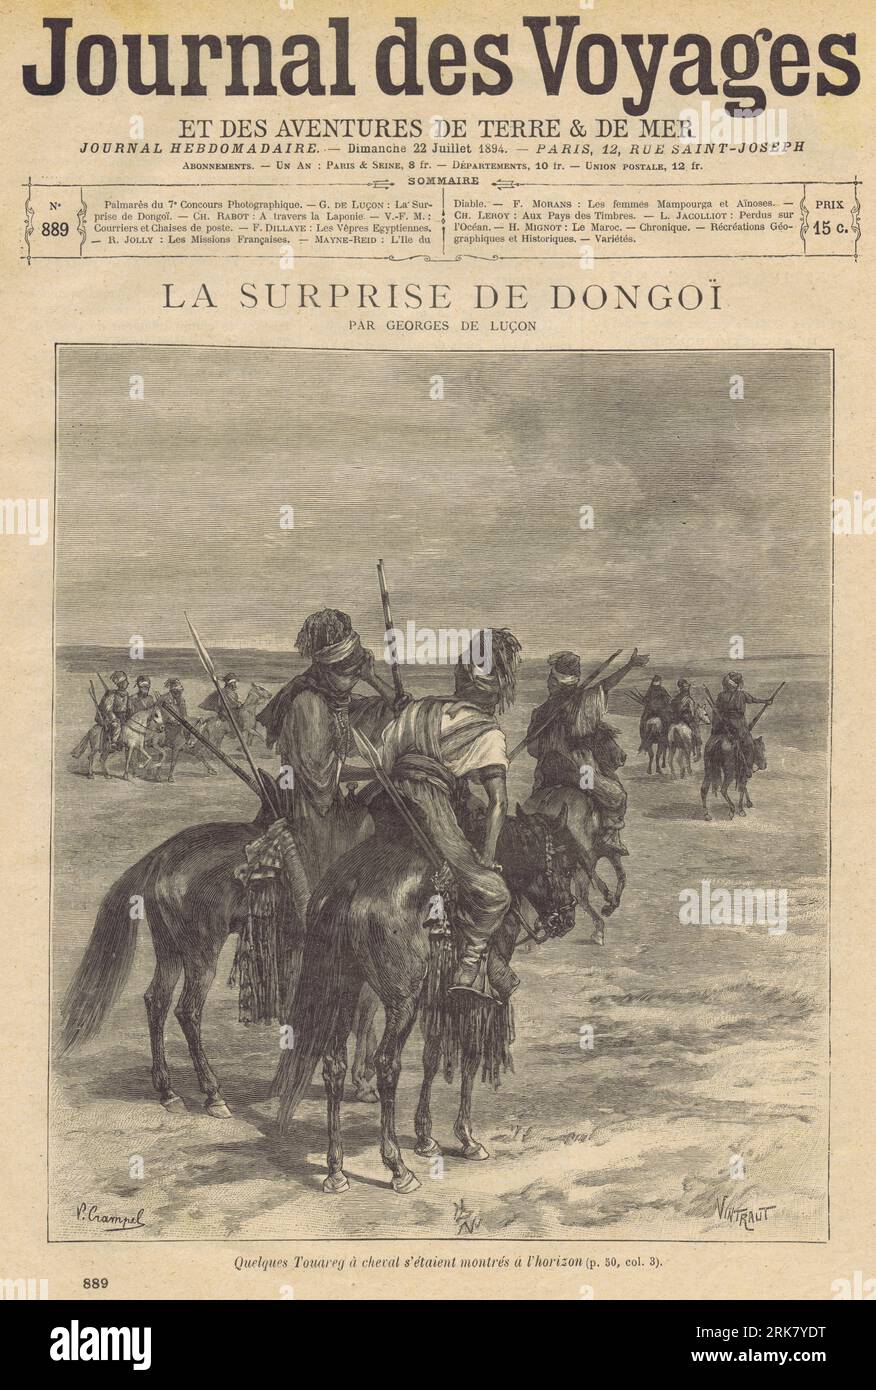 tuaregs on horses, Jounral des Voyages,1894, engraver Godefroy Frédéric Vintraut, illustrator Paule Crampel Stock Photo